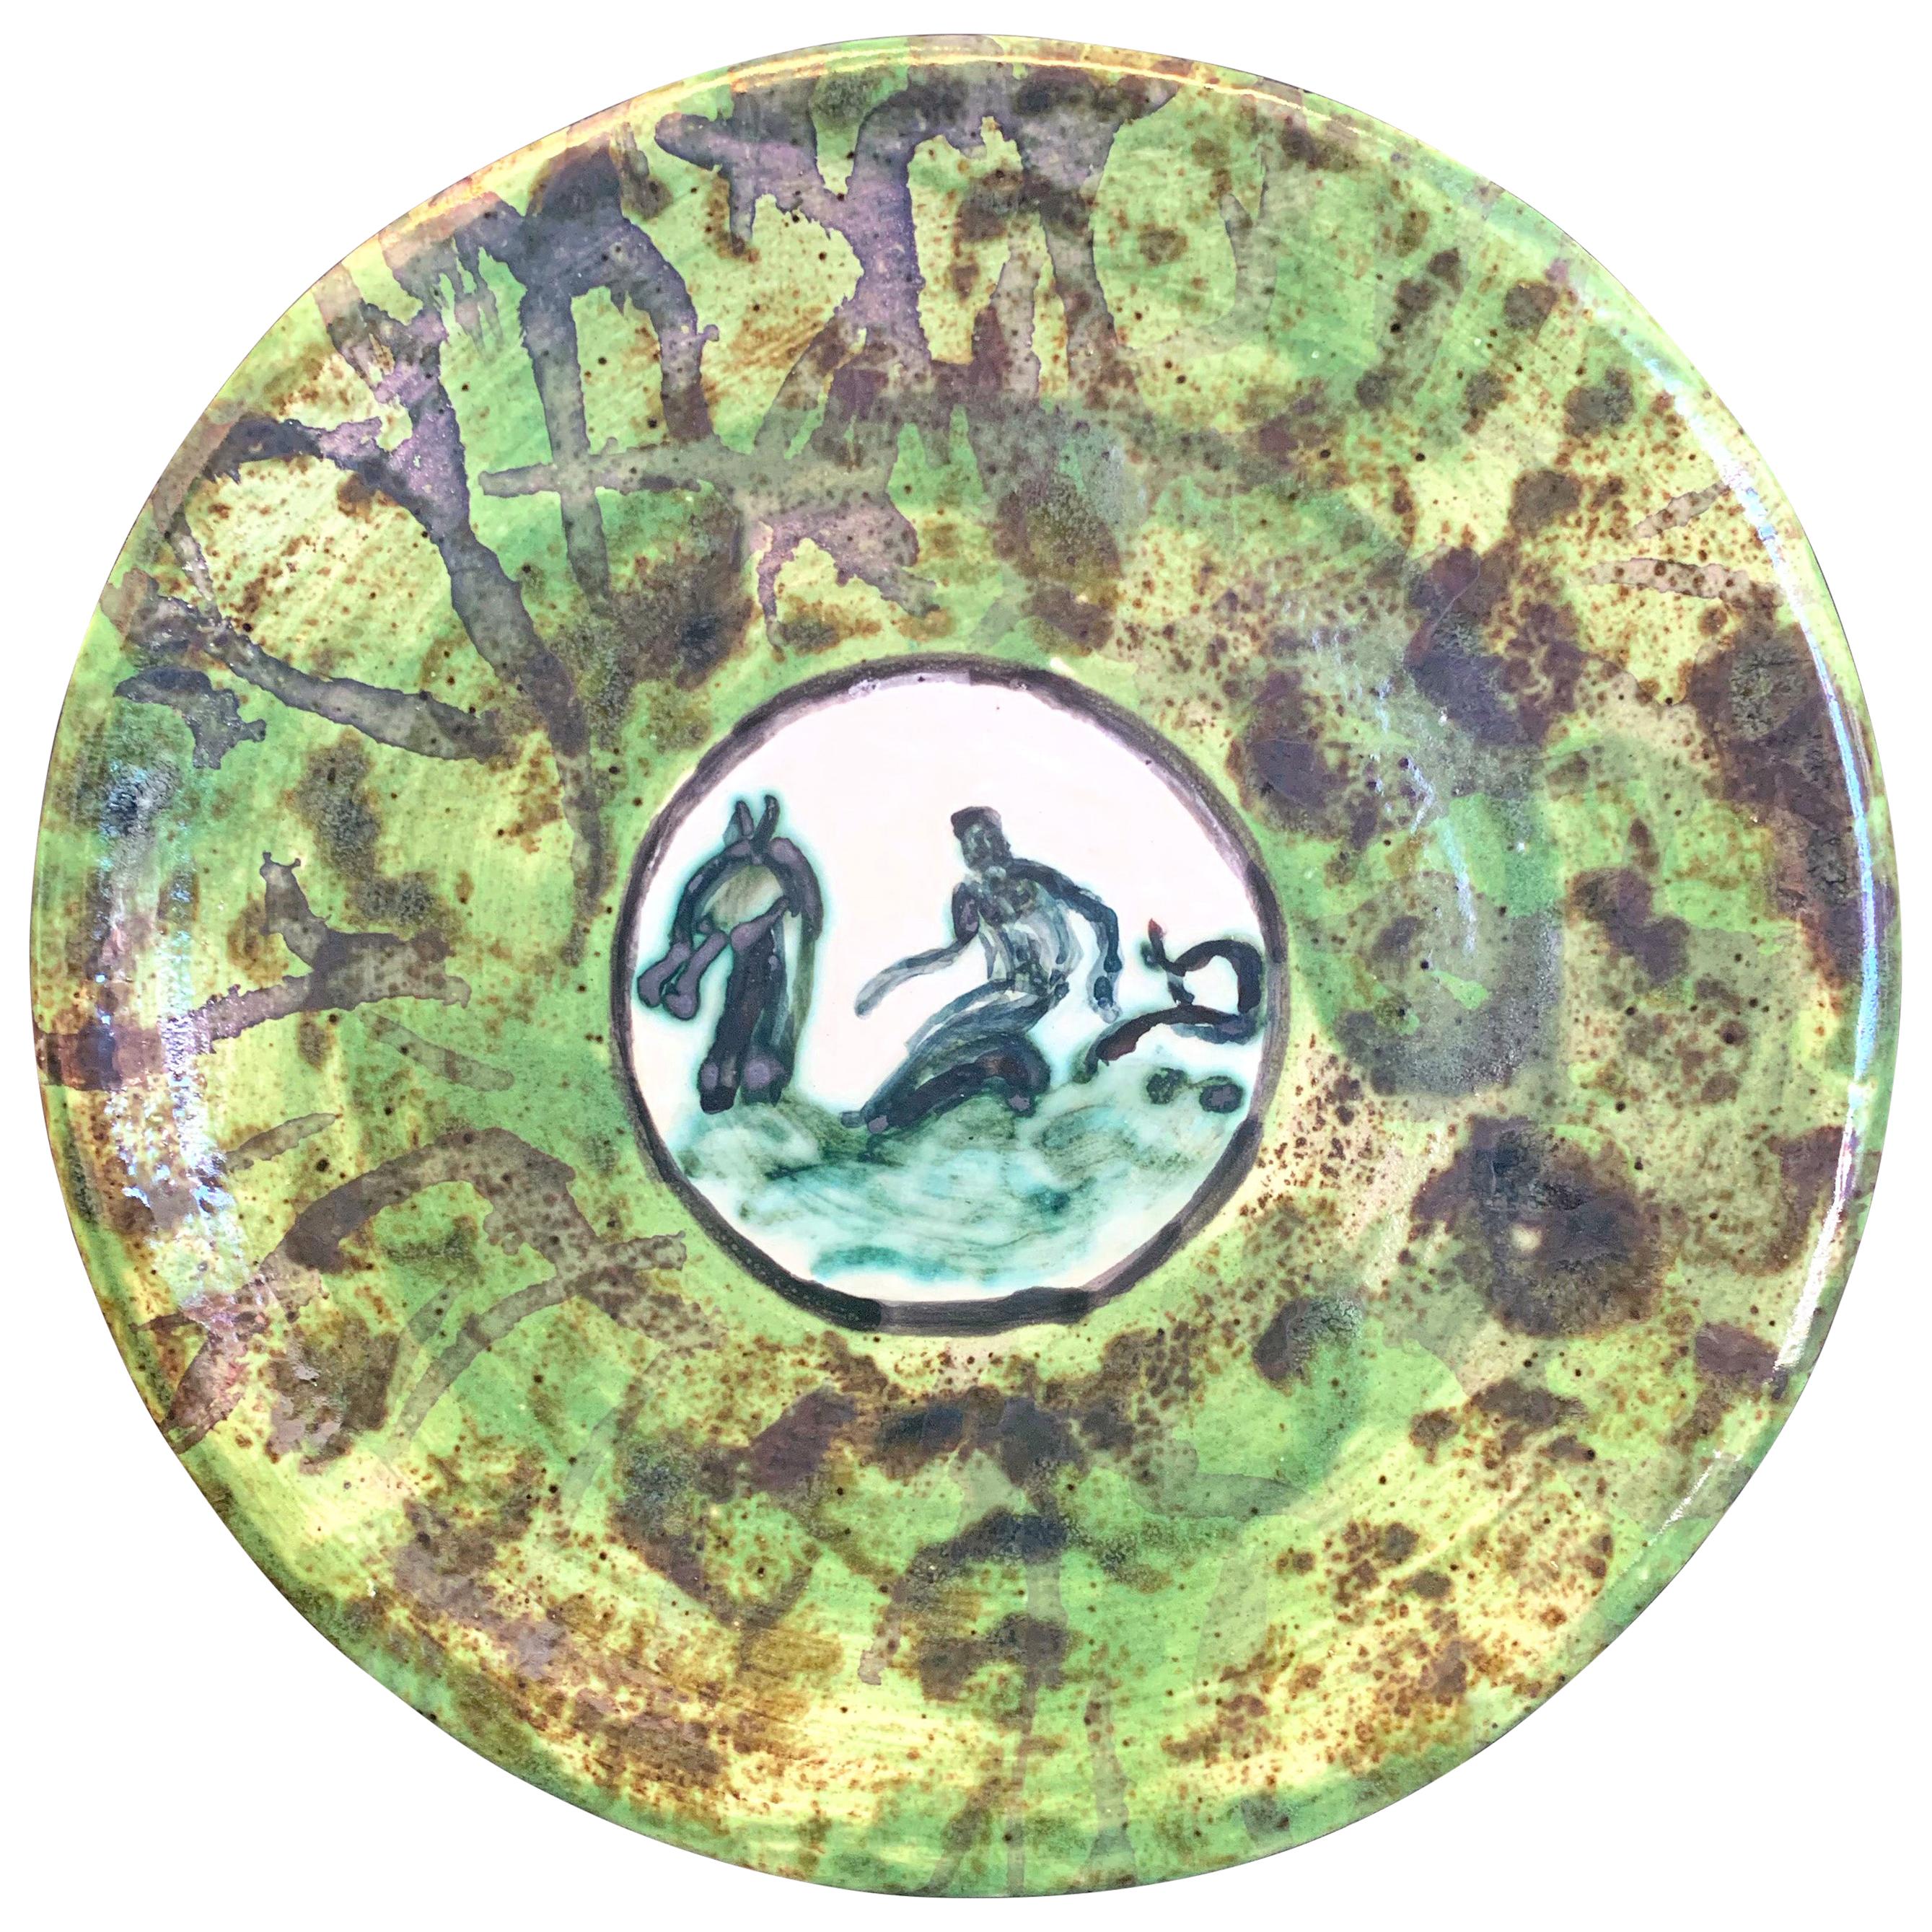 "Neptune Riding Sea Dragon, " Striking Art Deco Plate by Ceramics Master Mayodon